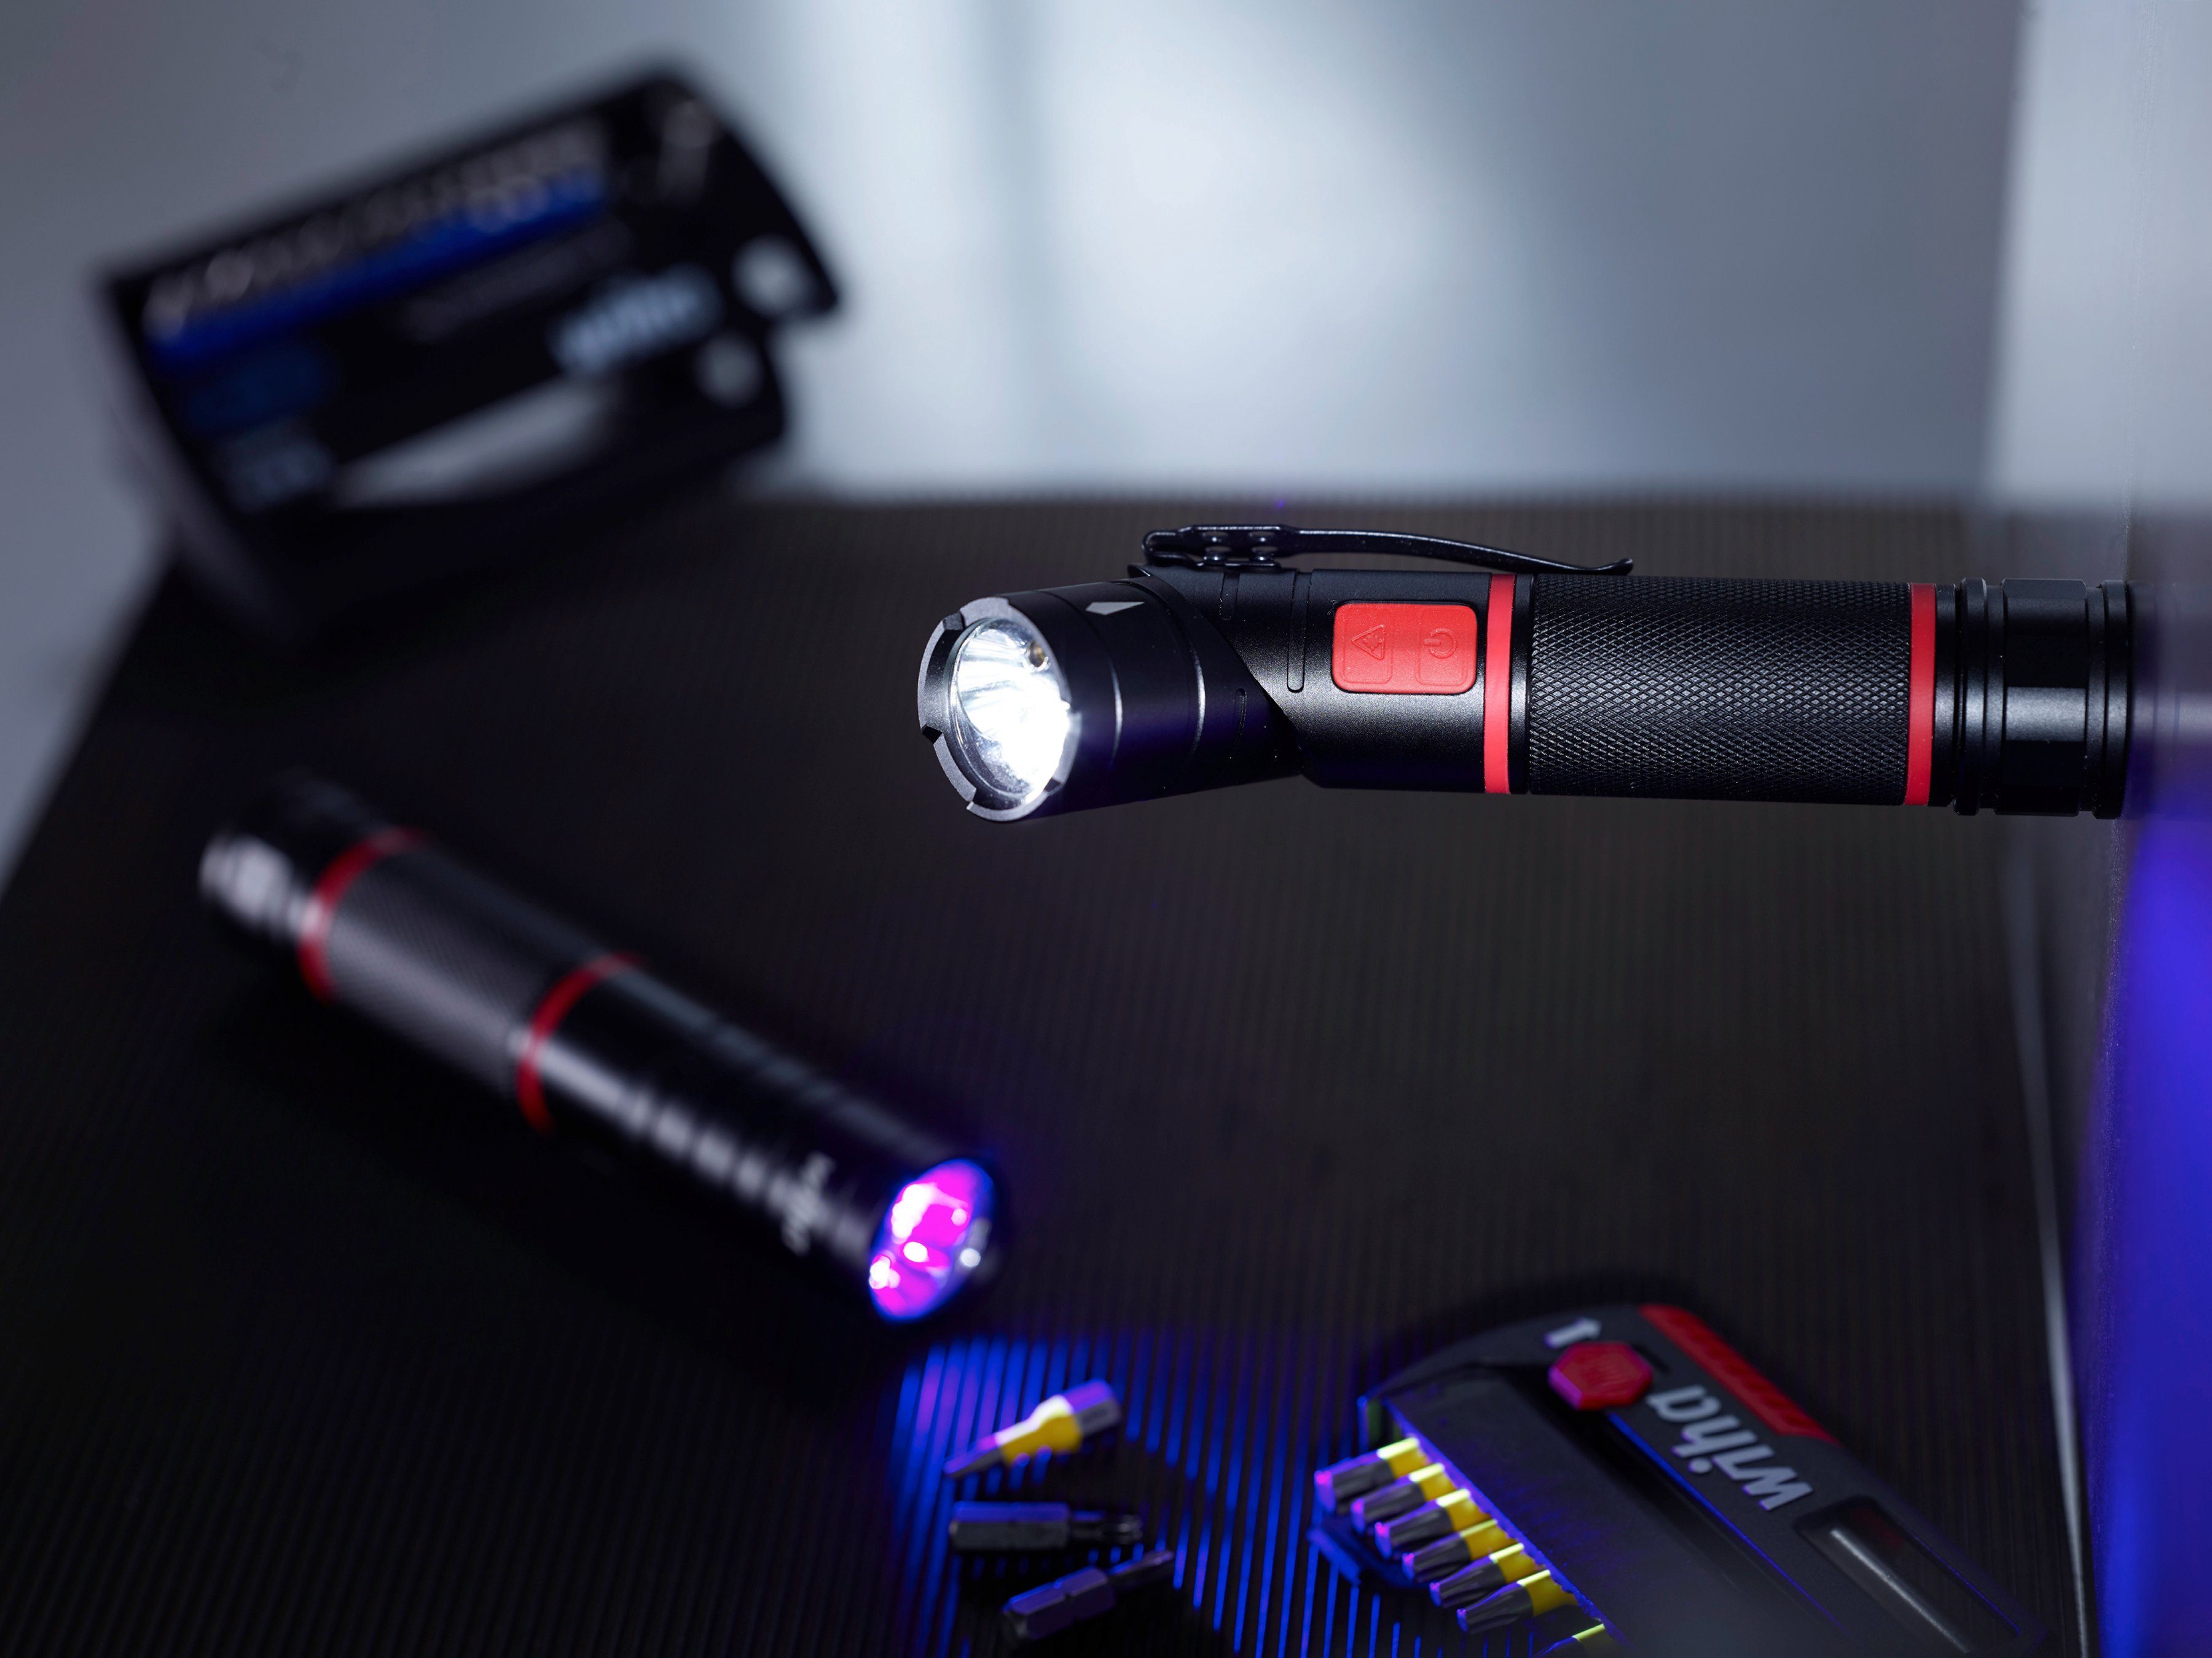 Wiha LED Taschenlampe 41286, 2 Batterien Kopf, Laser, Lichtstufen, inkl. UV-Licht, schwenkbarer